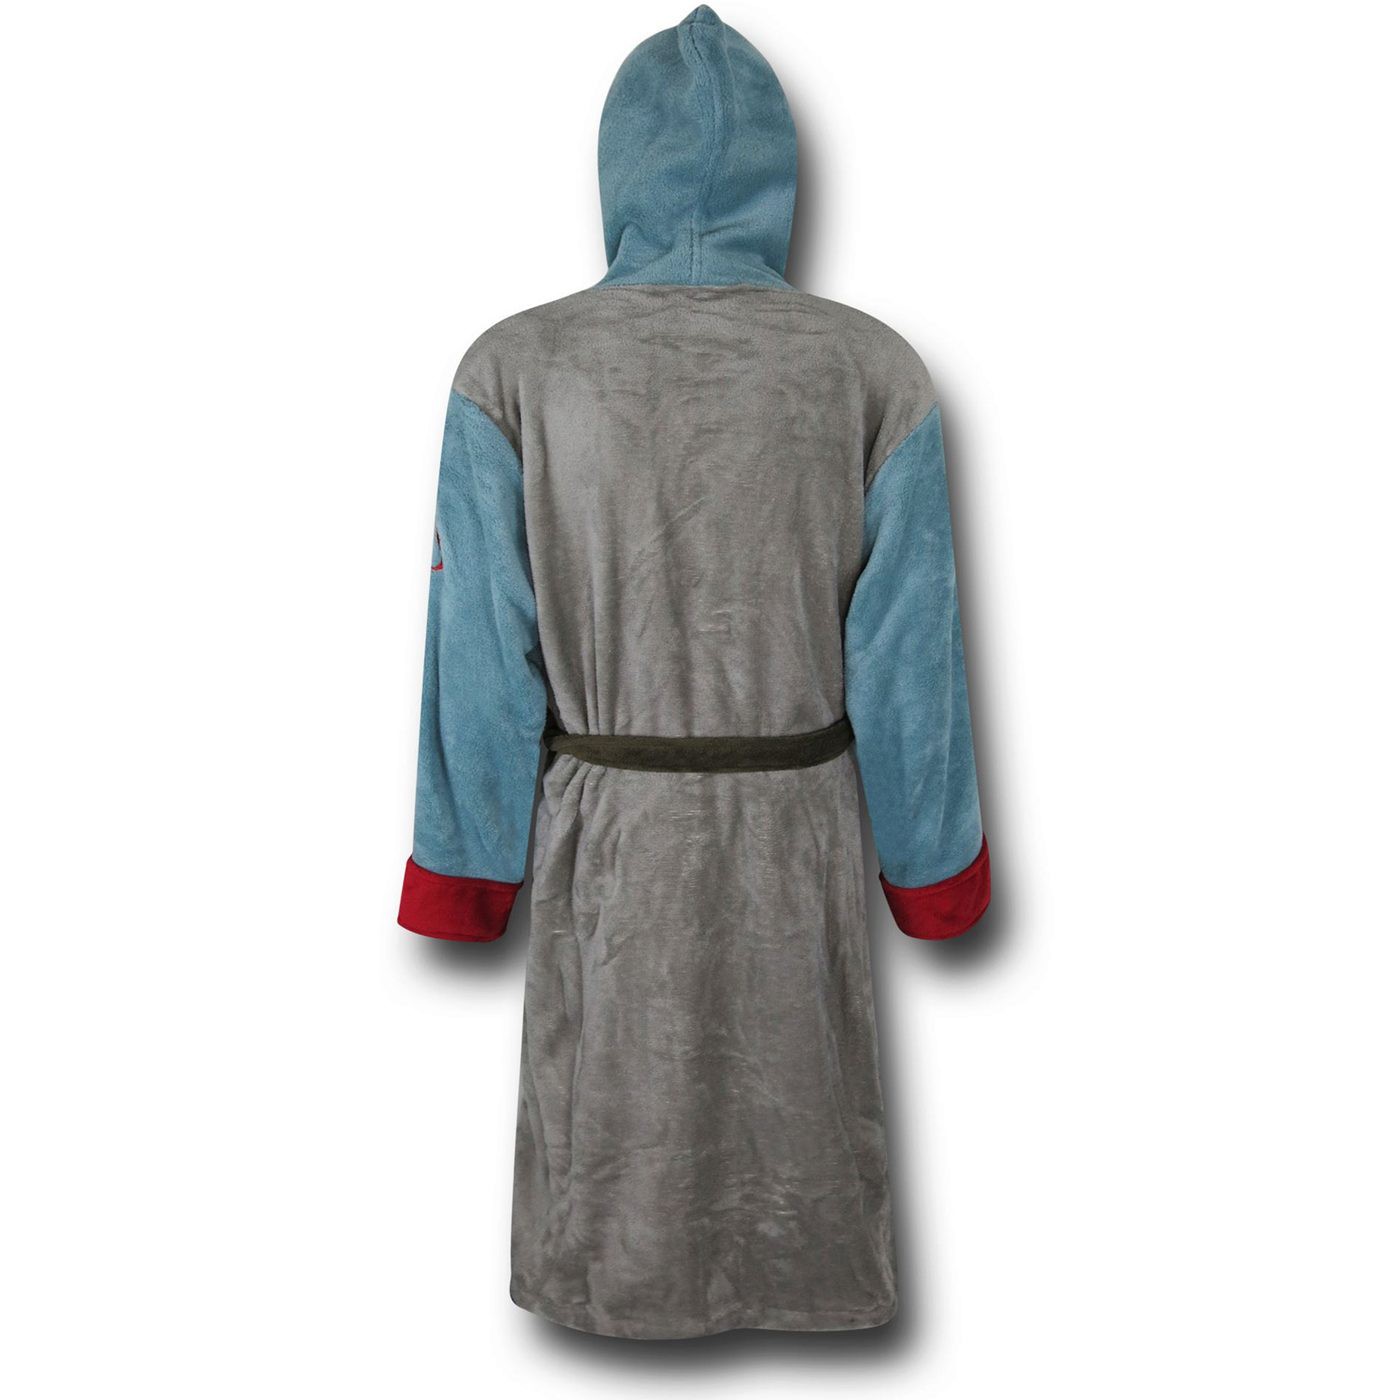 Star Wars Boba Fett Hooded Robe